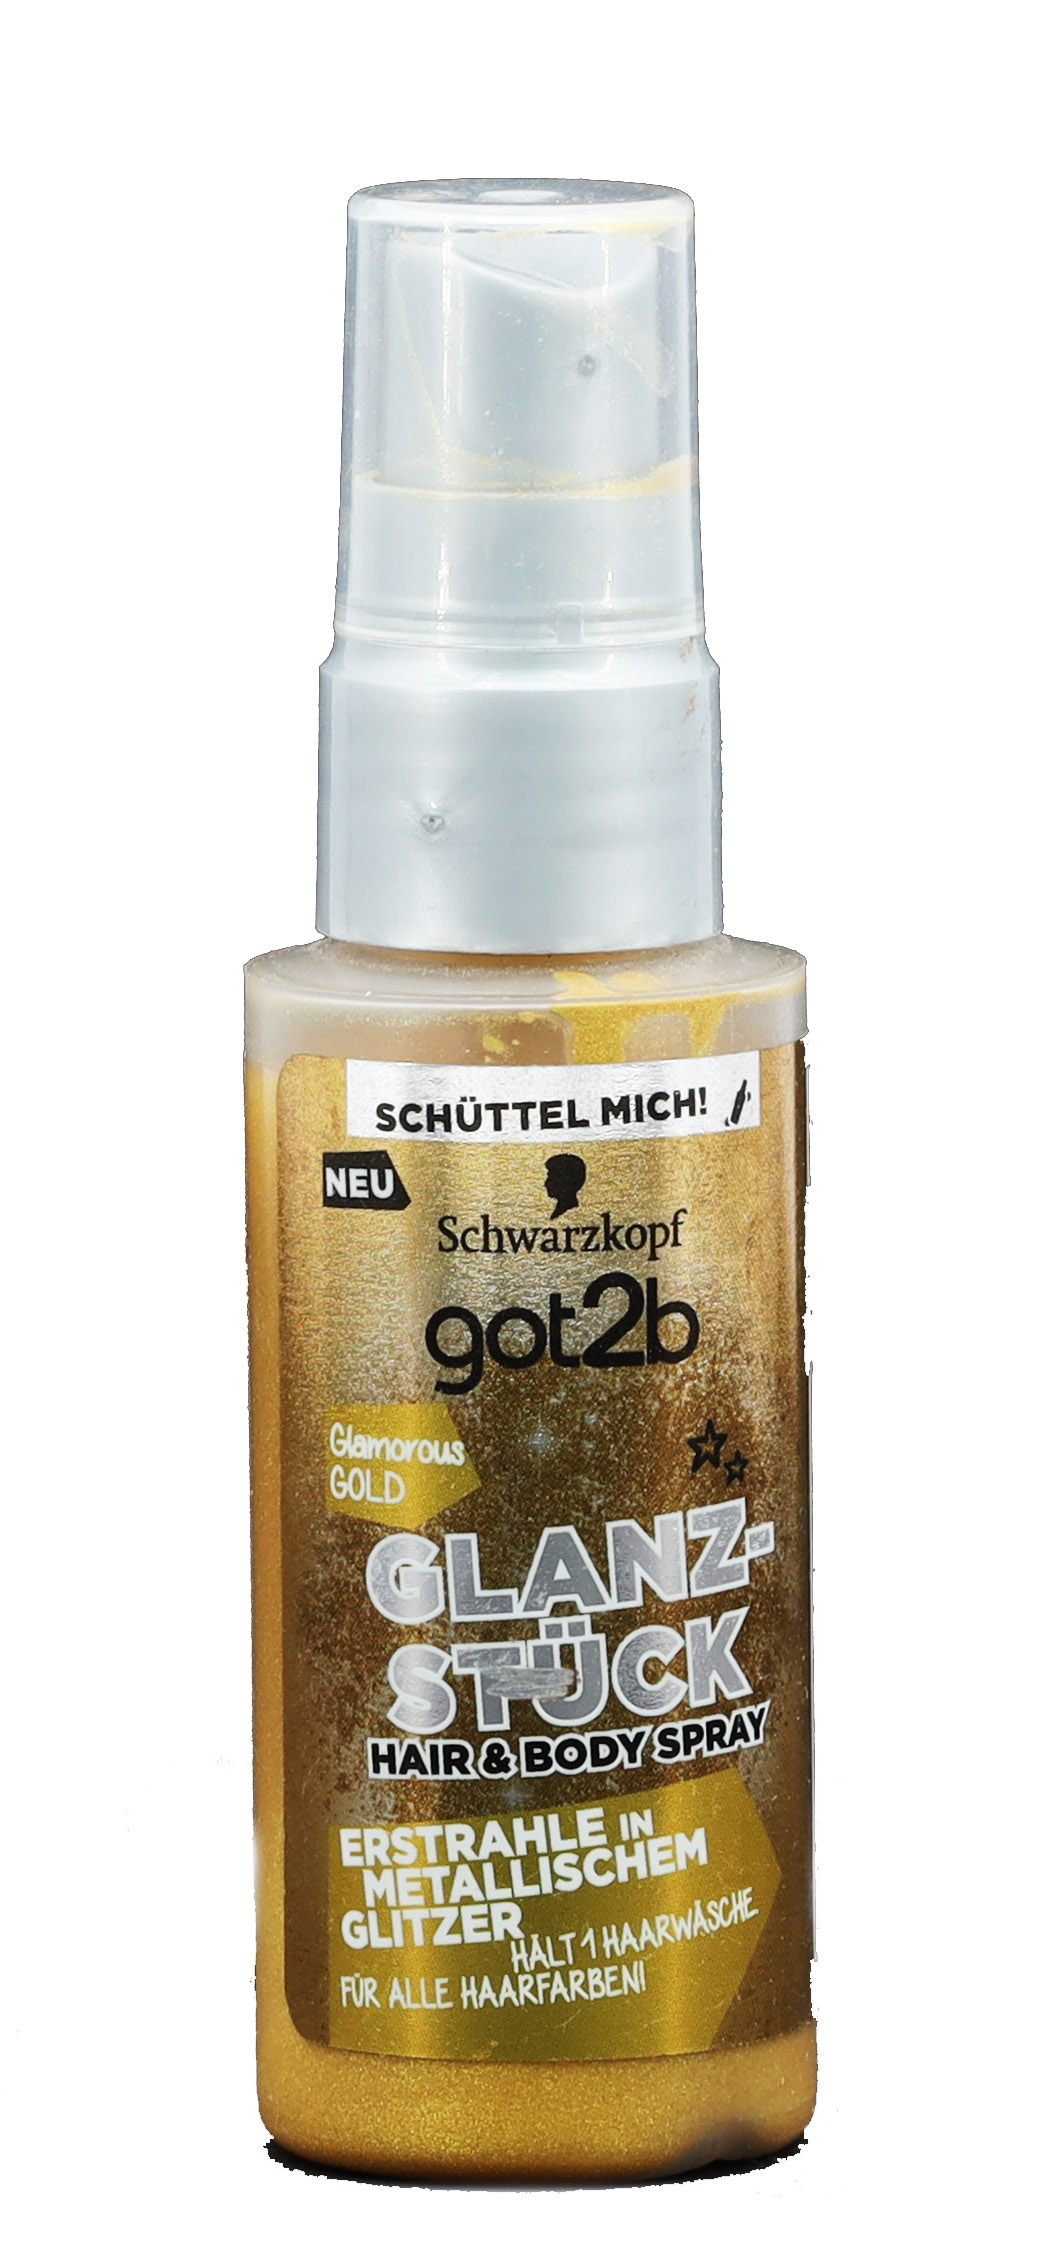 Schwarzkopf got2b Glanzstück Glowing Gold Haar&Körperspray 50ml